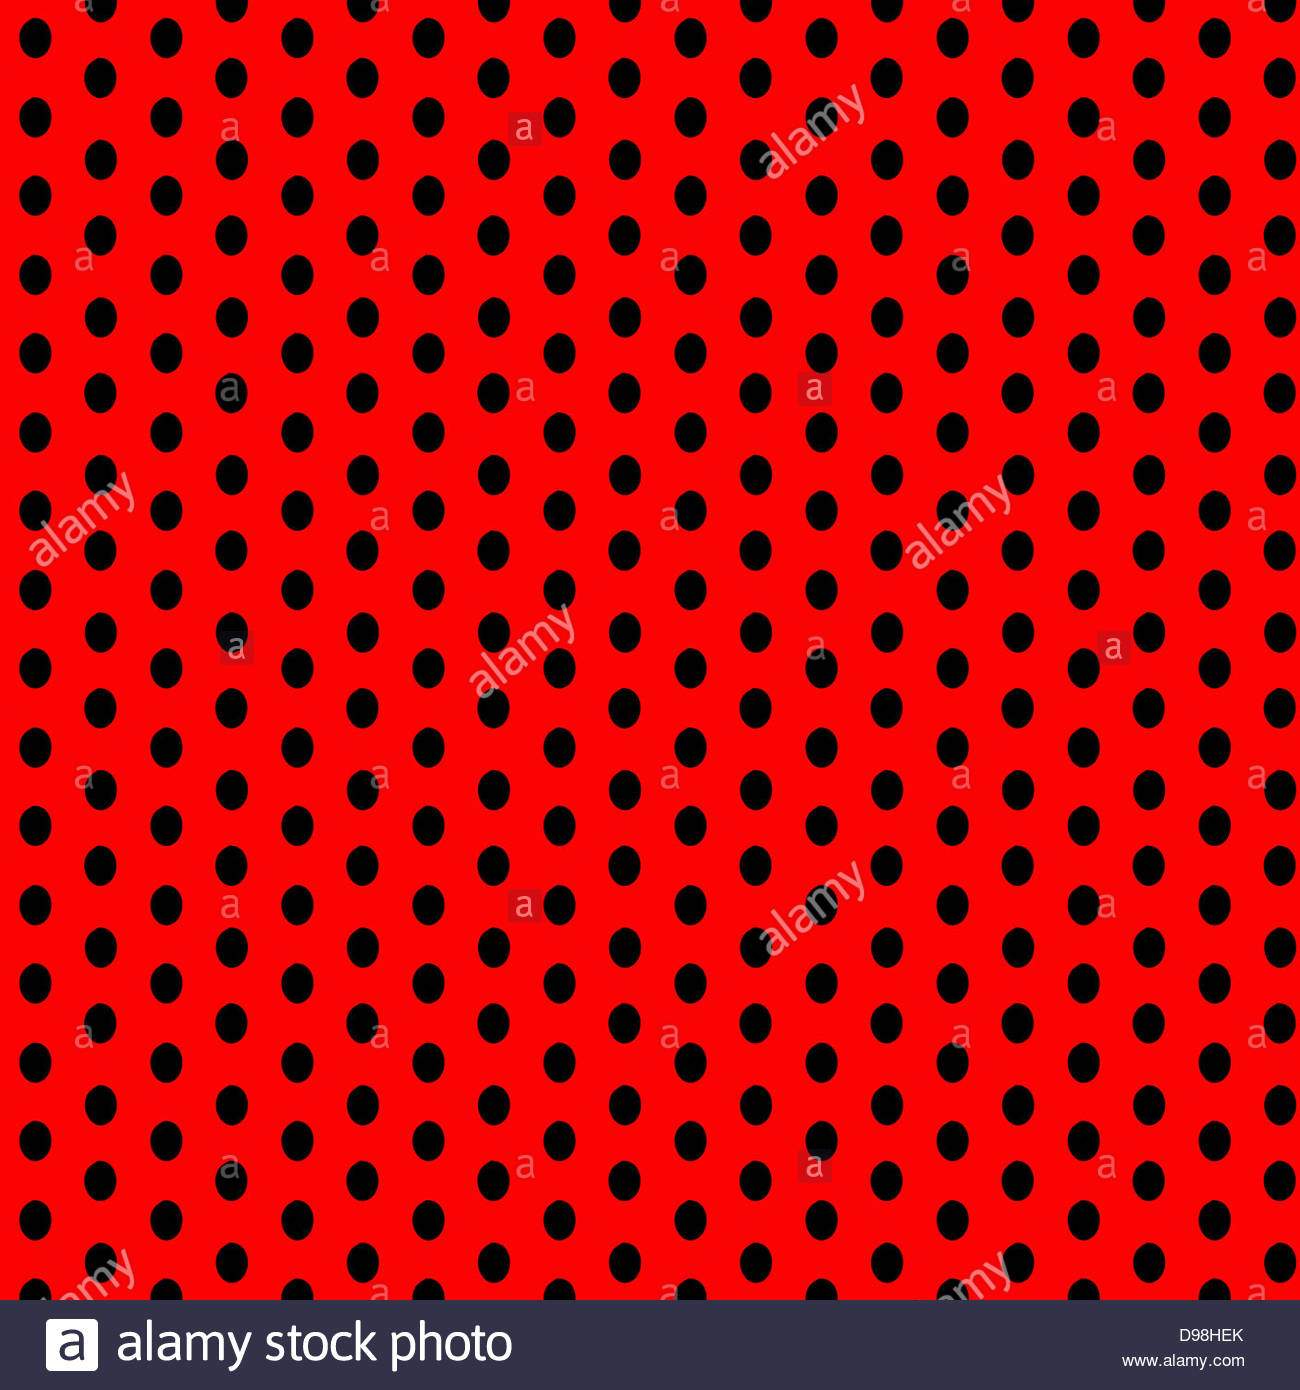 Digital Composite Background Black Polka Dots On A Red